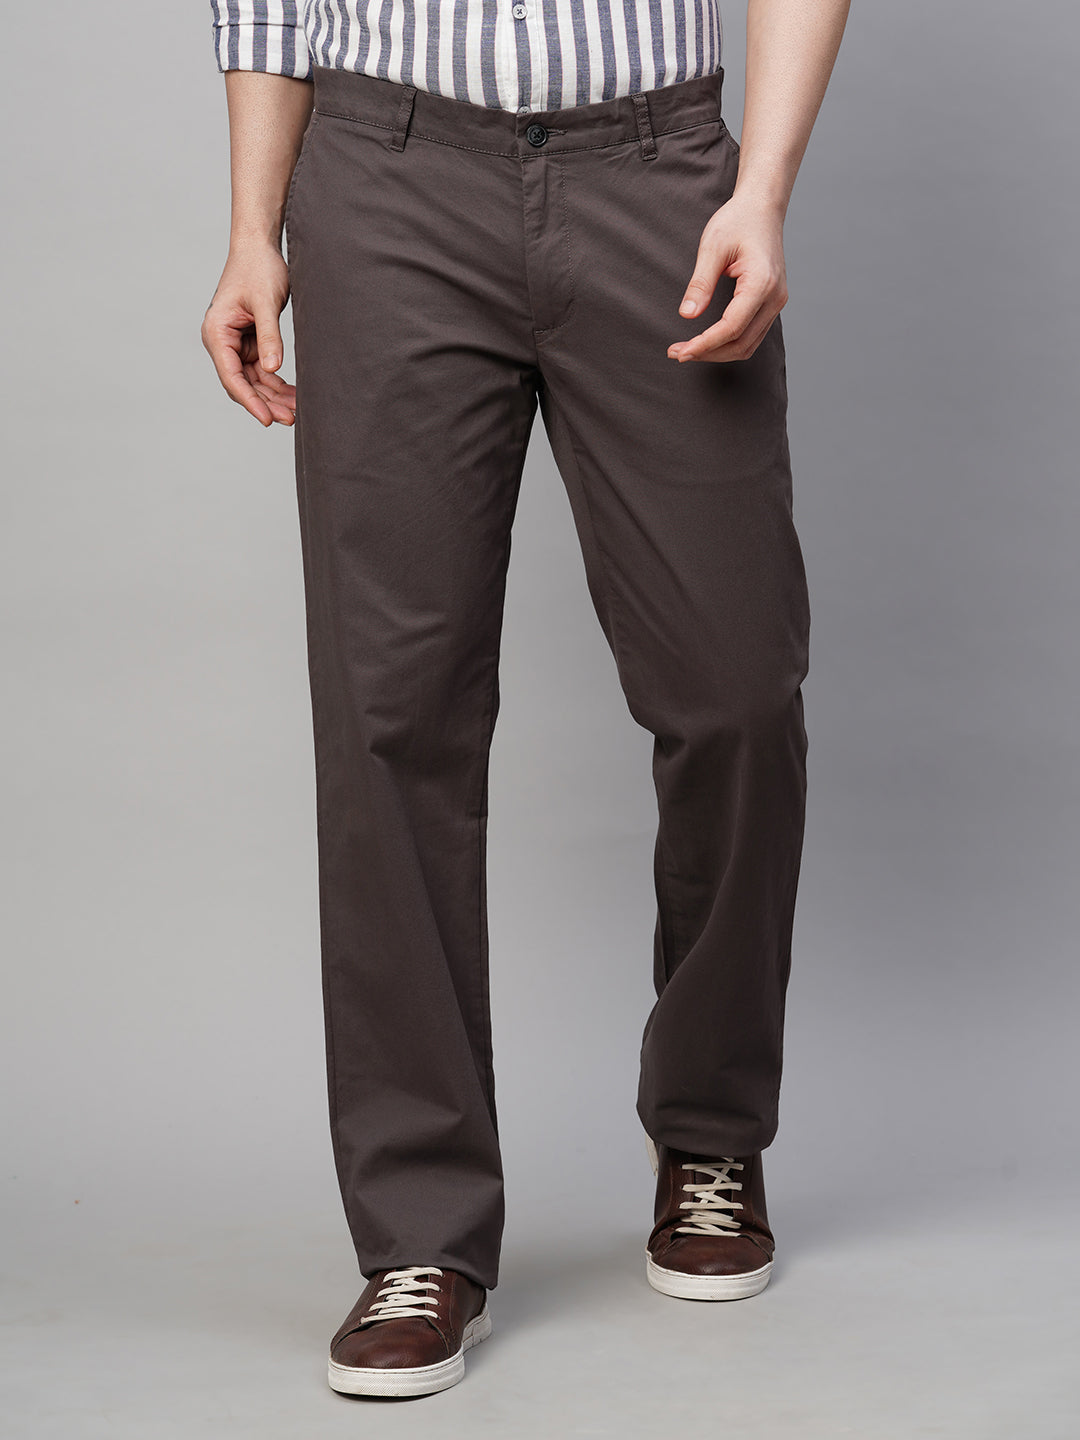 khakis: Men's Casual & Dress Pants | Dillard's